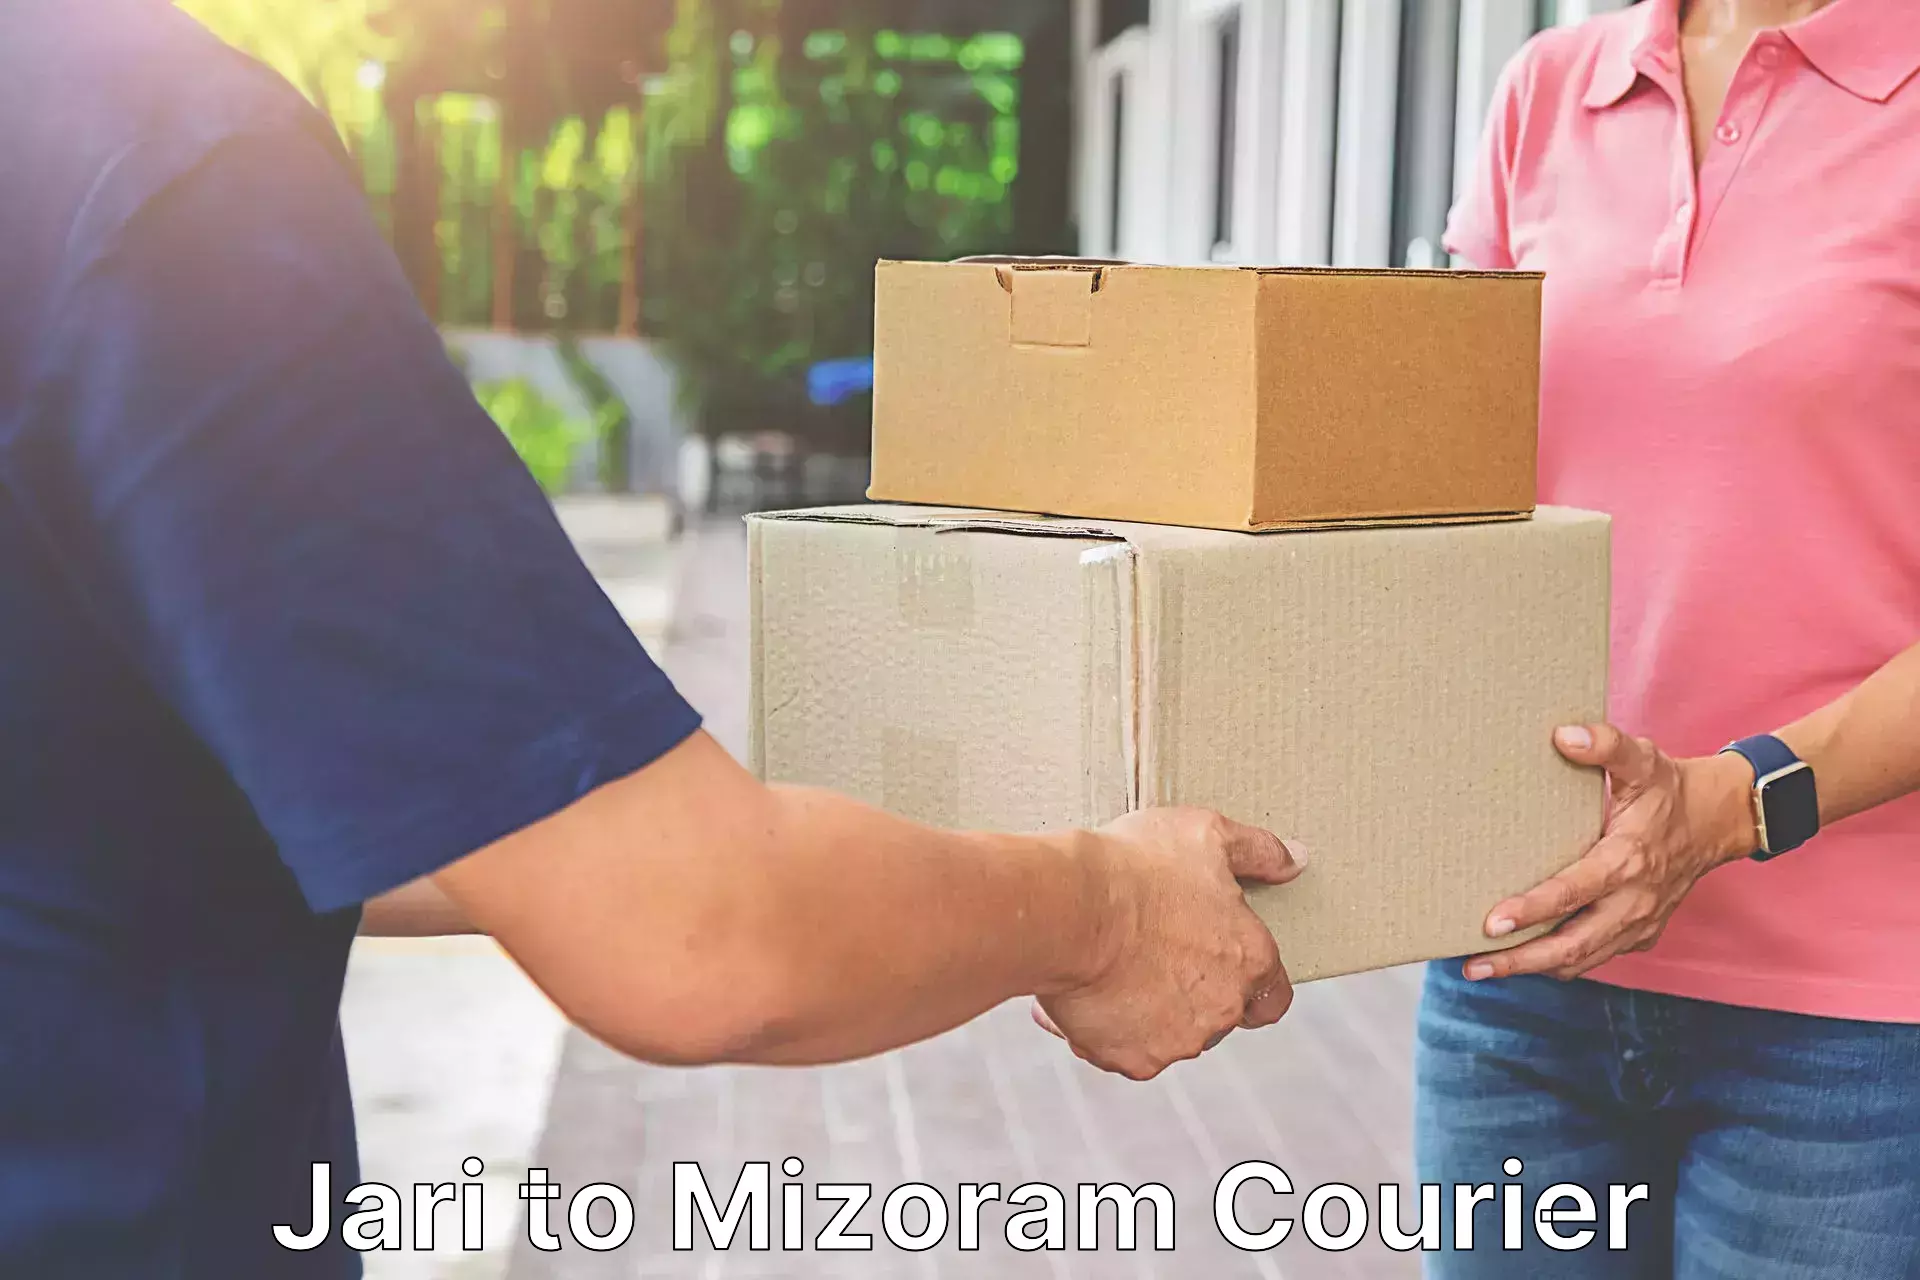 High-speed delivery Jari to Mizoram